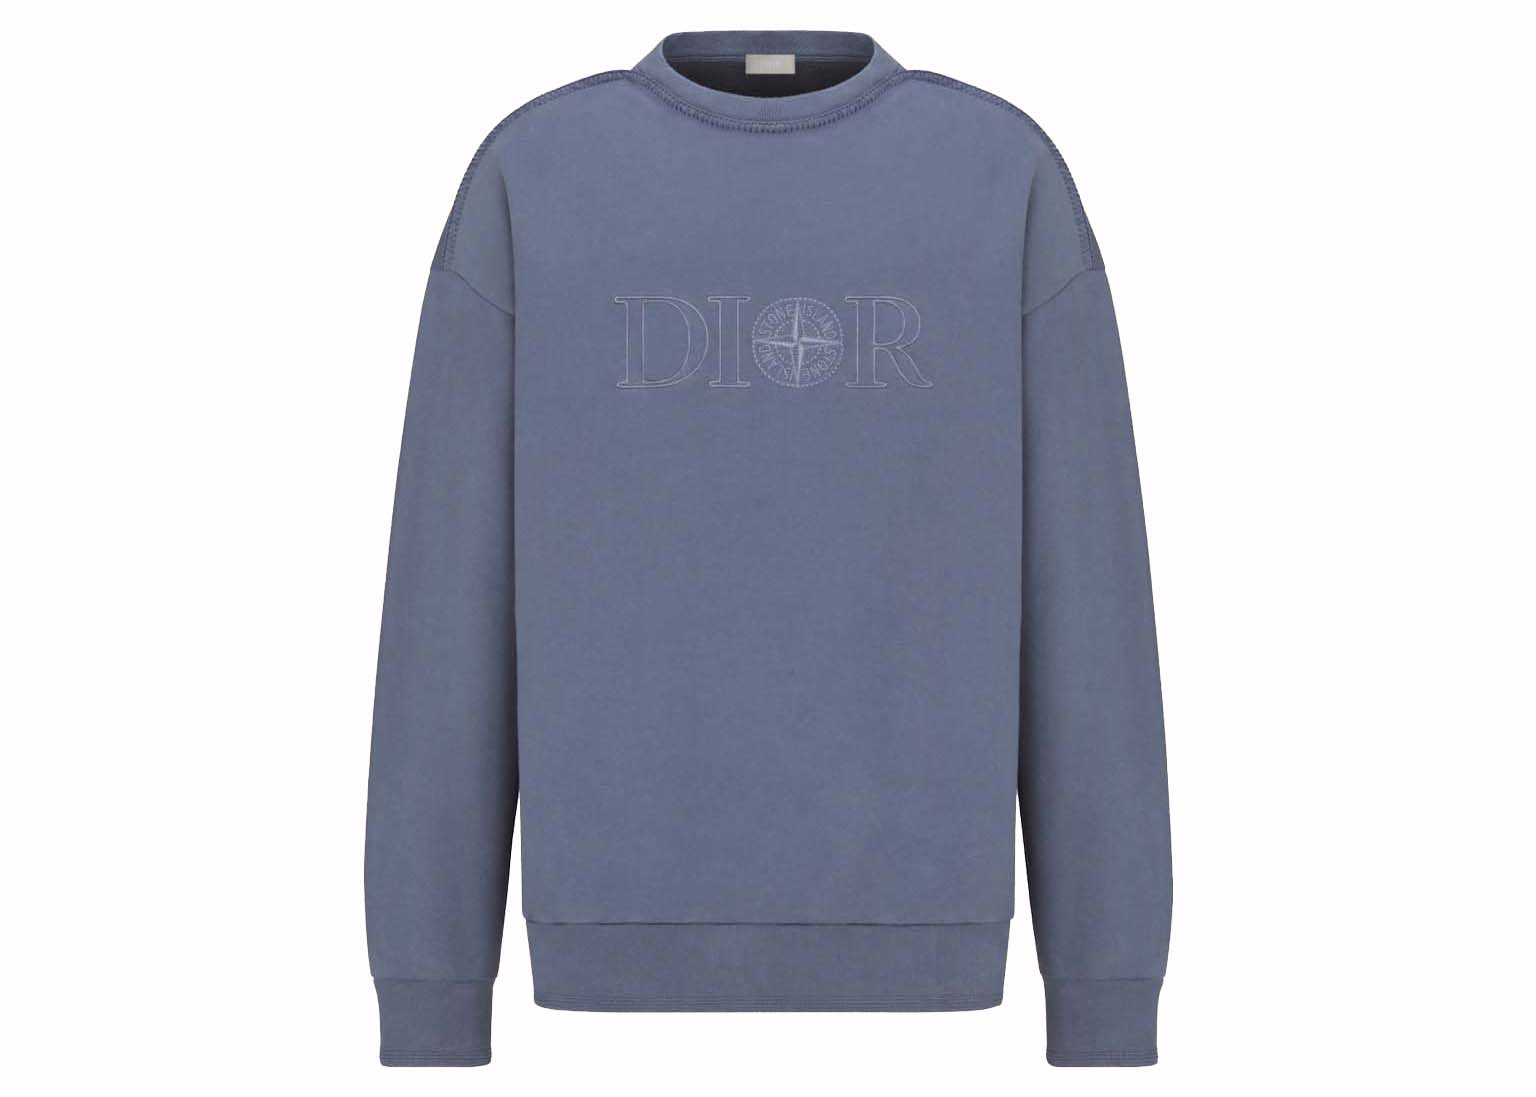 Dior x Stone Island Sweatshirt Gray